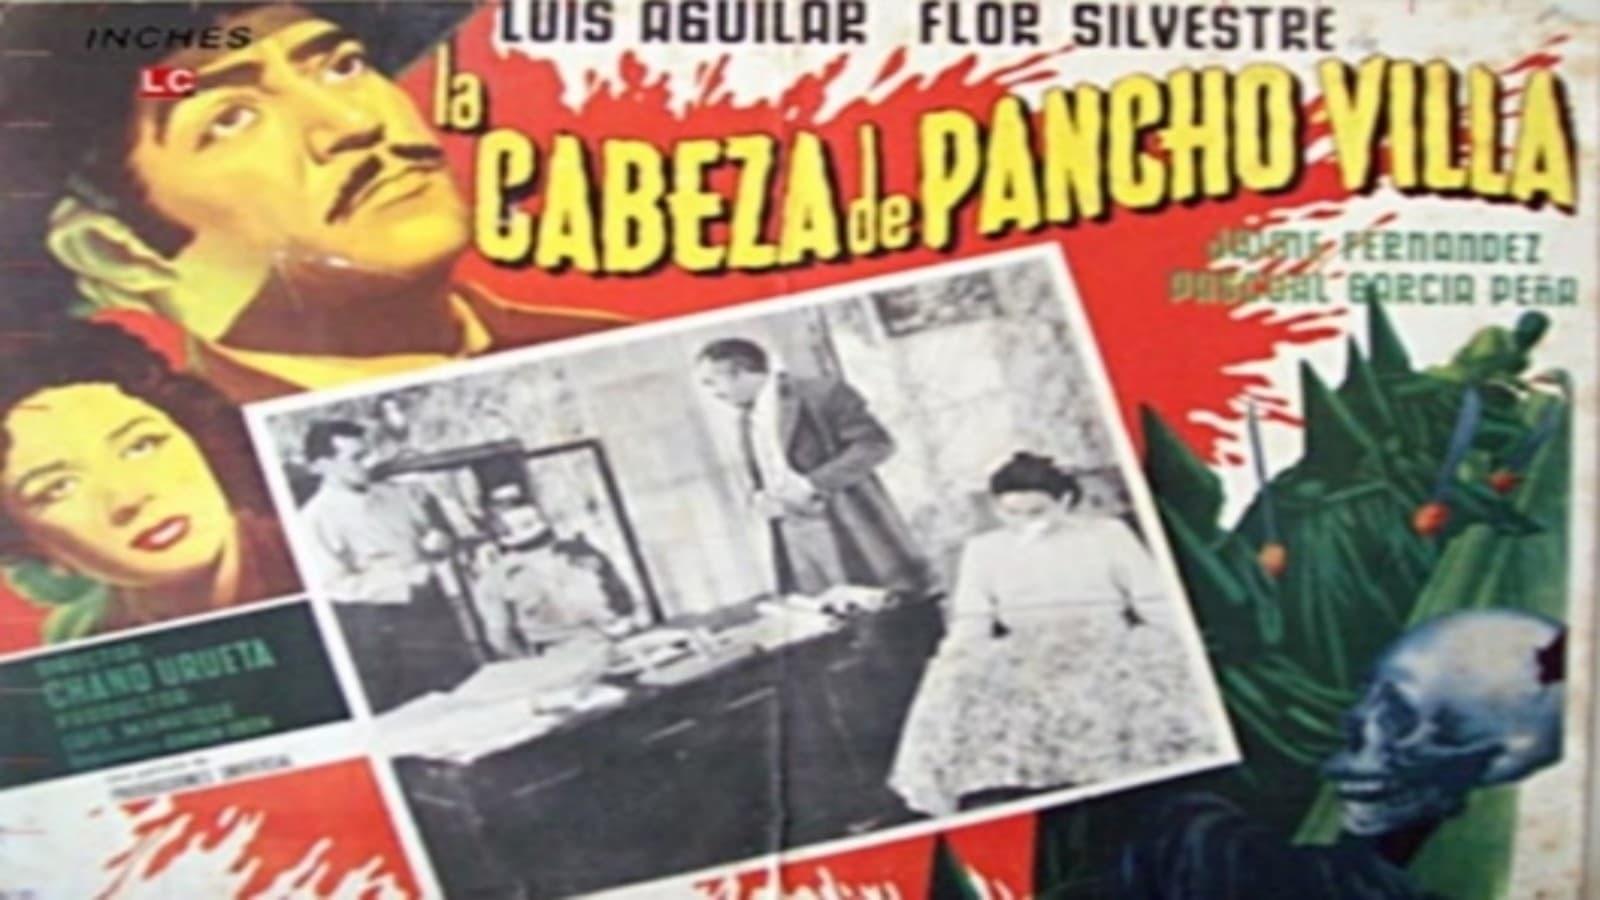 The Head of Pancho Villa backdrop